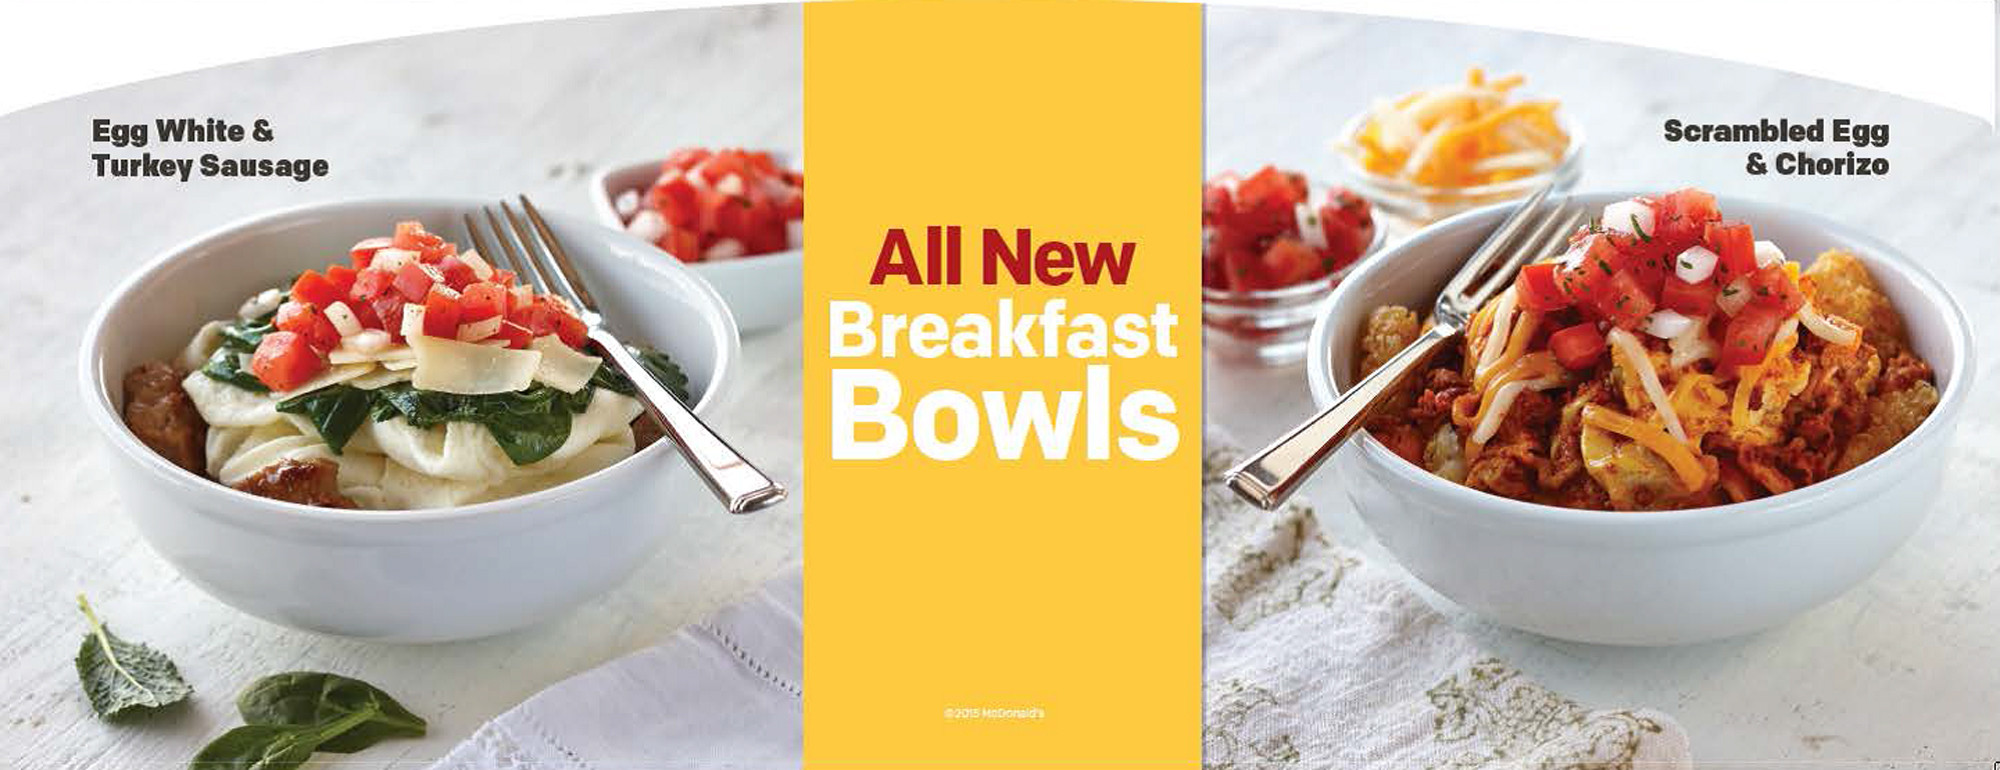 Breakfast Bowls Mcdonalds
 McDonald s adding new ingre nt kale HT Health